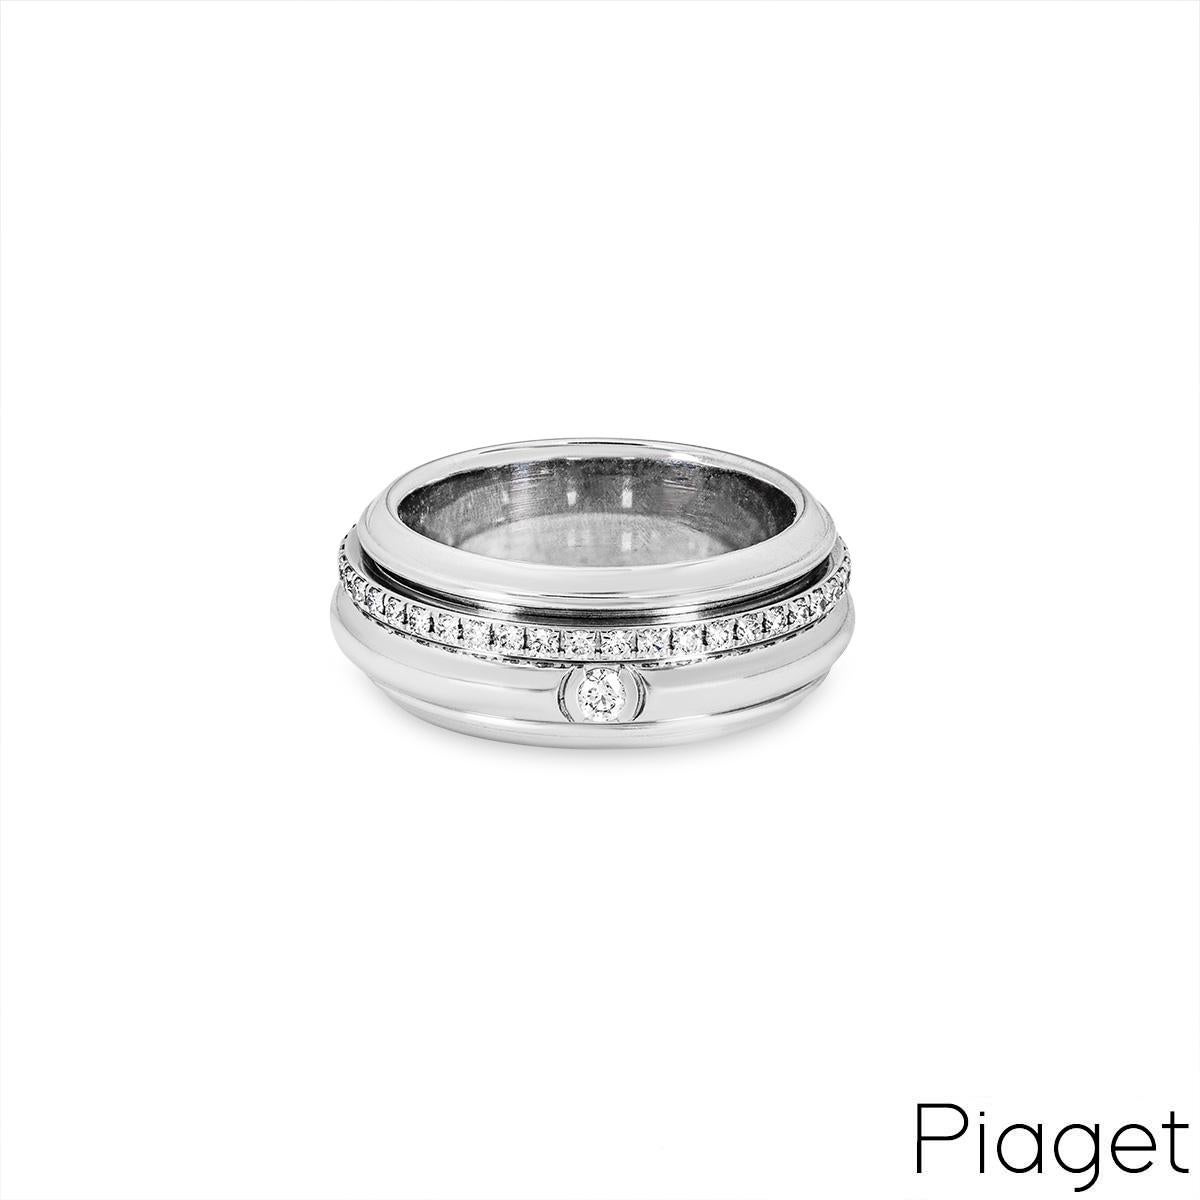 Round Cut Piaget White Gold Diamond Possession Ring